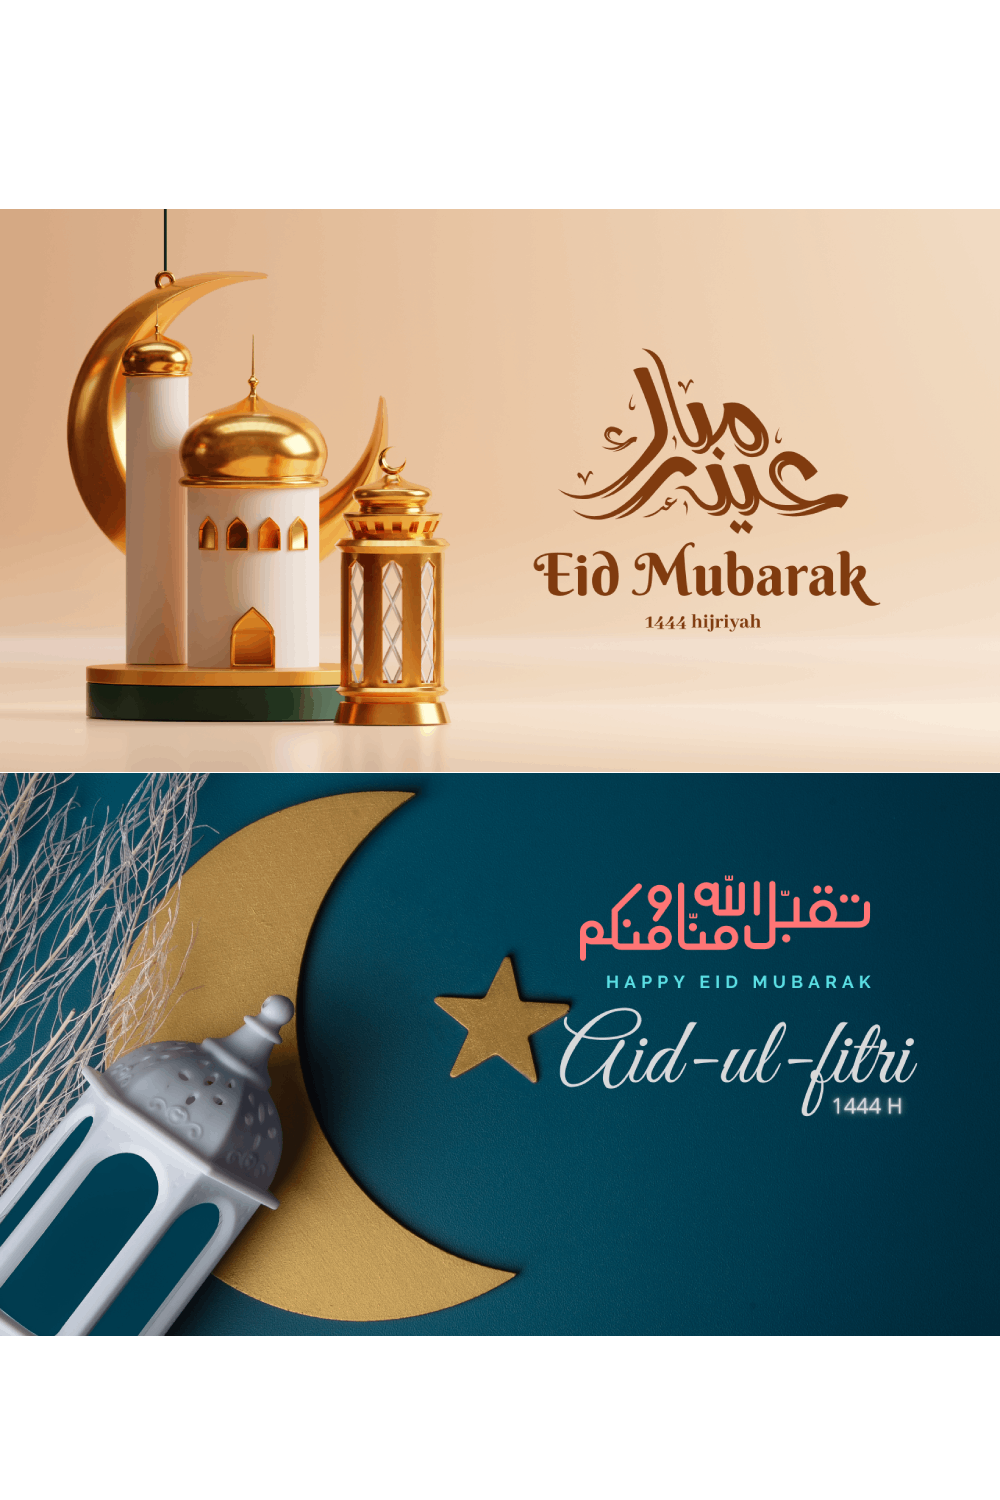 Eid Mubarak Editable Template for Social Media Post pinterest preview image.